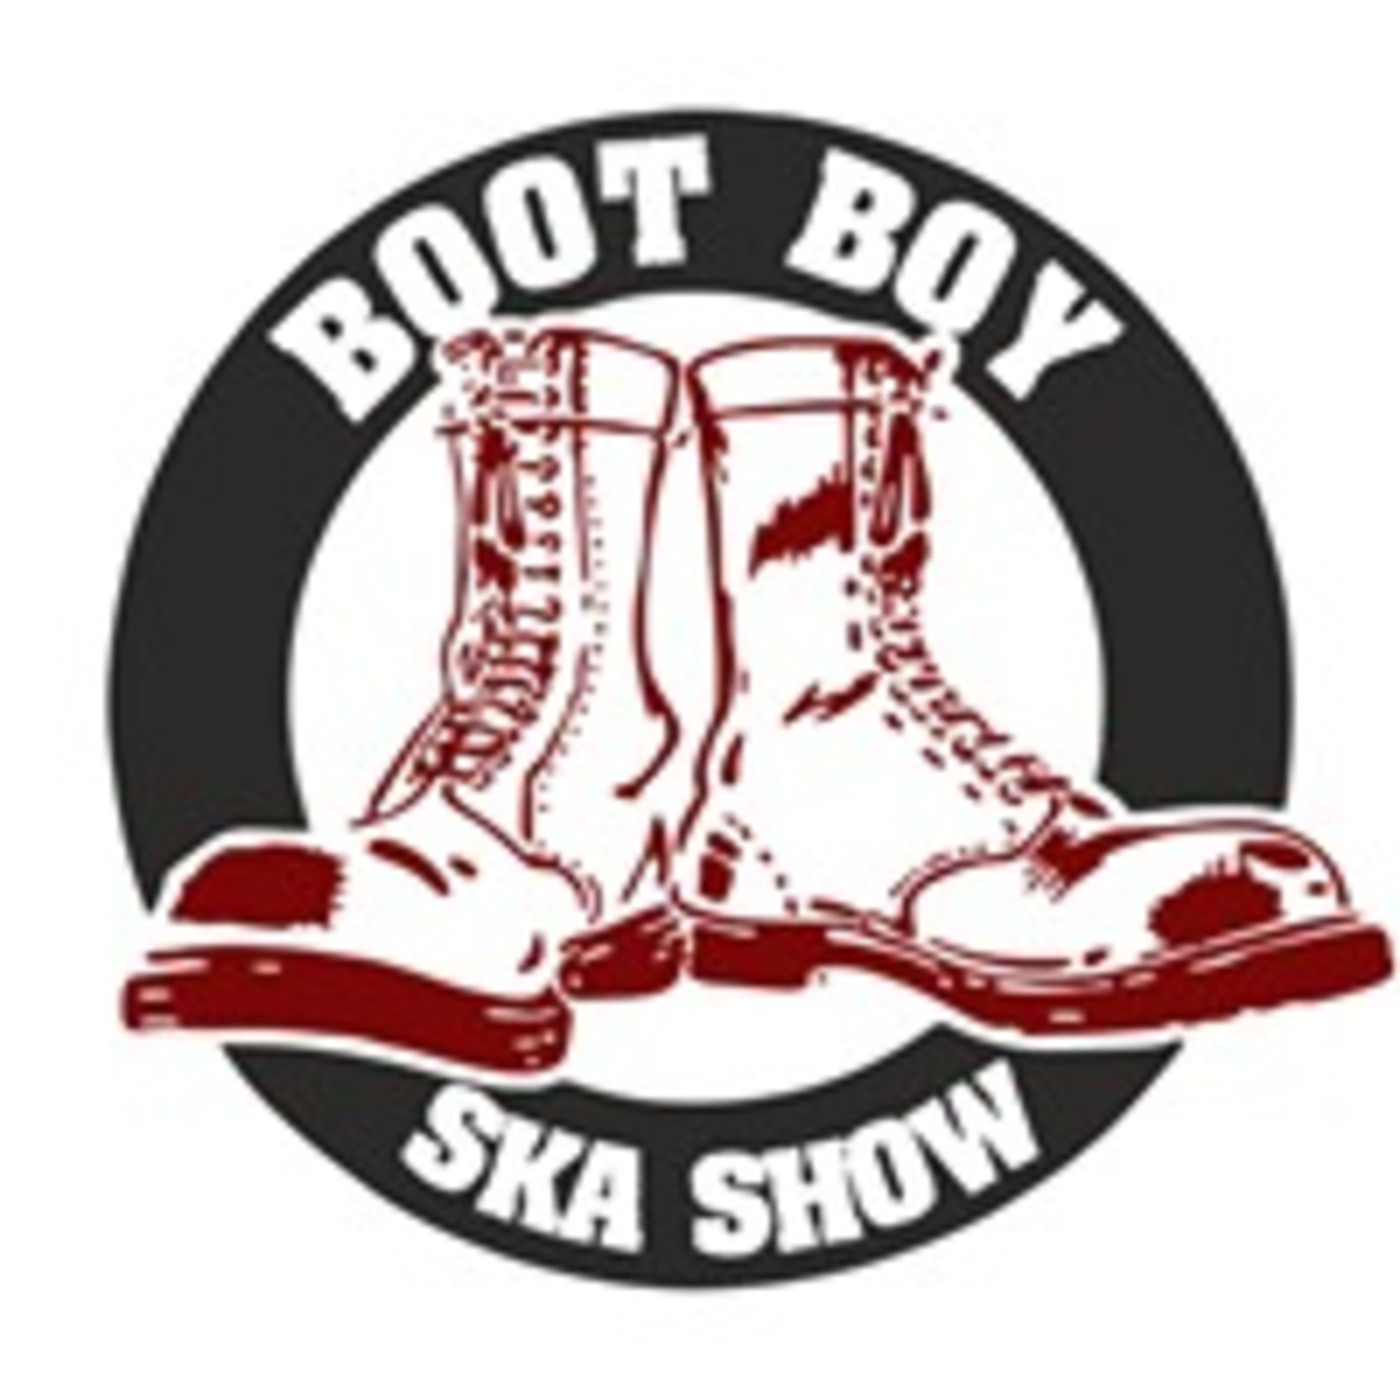 Episode 2744: The Boot Boy Ska Show With Geoff Longbar 21st October 2022 On www.bootboyradio.net